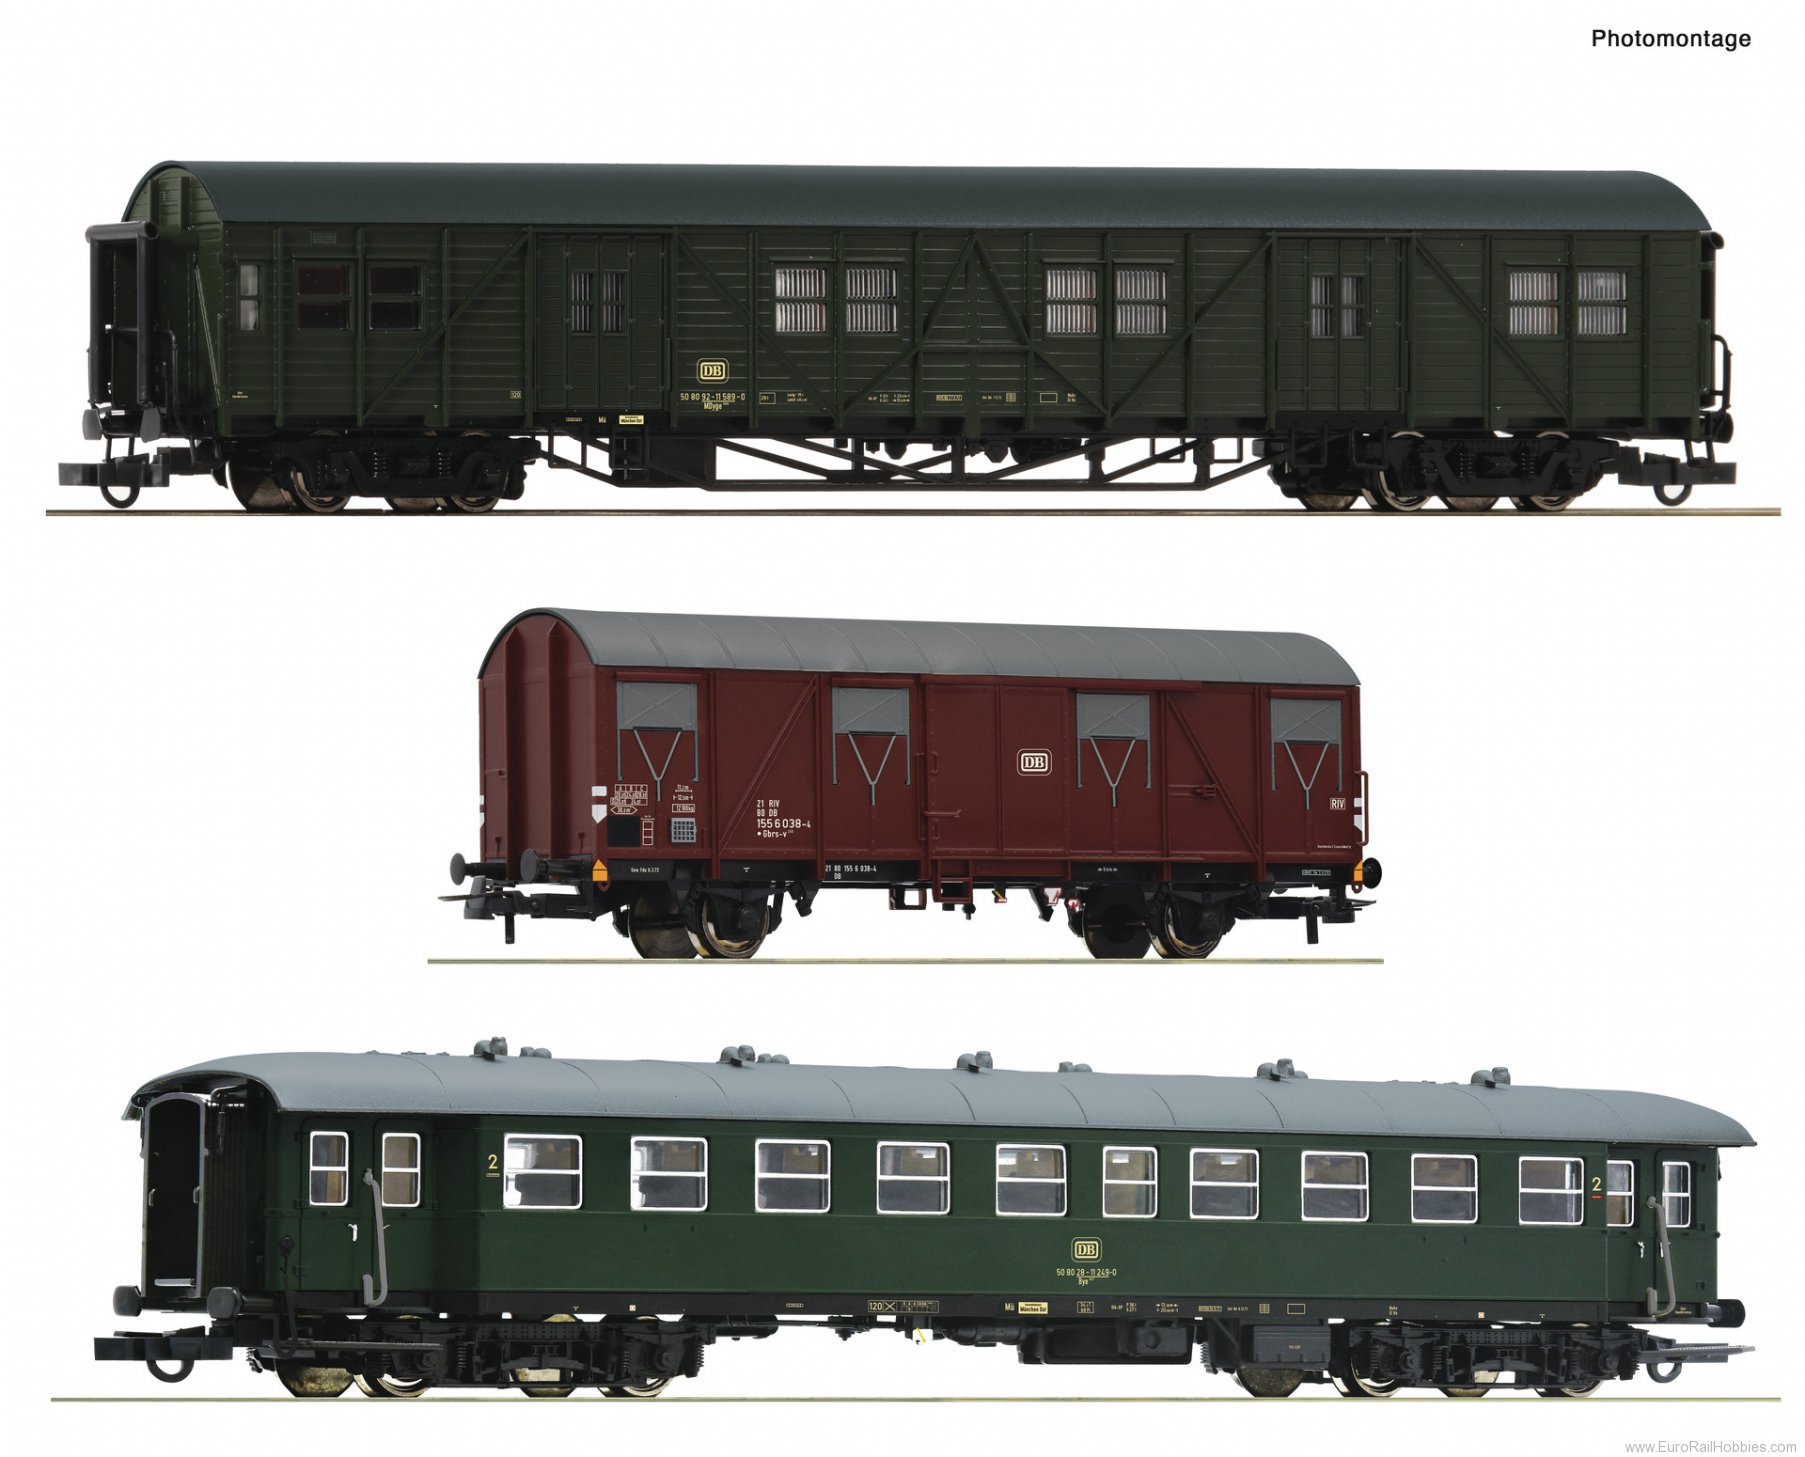 Roco 74010 3-piece set 1: Passenger train Freilassing, D